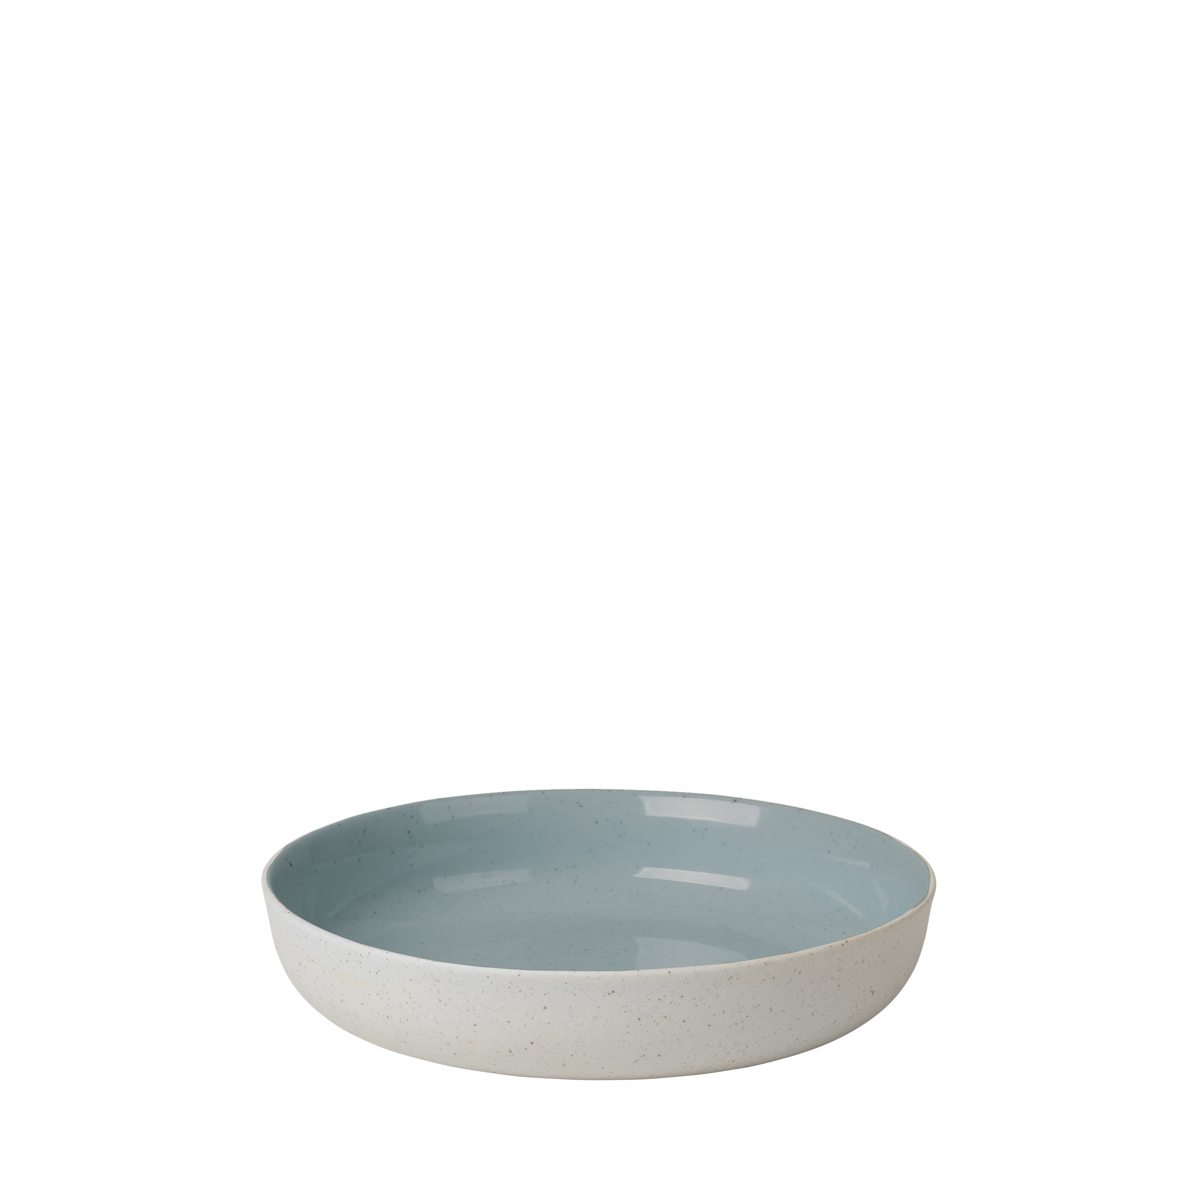 Tiefer Teller -SABLO- Stone 500 ml, Ø 18,5 cm. Material: Keramik. Von Blomus.